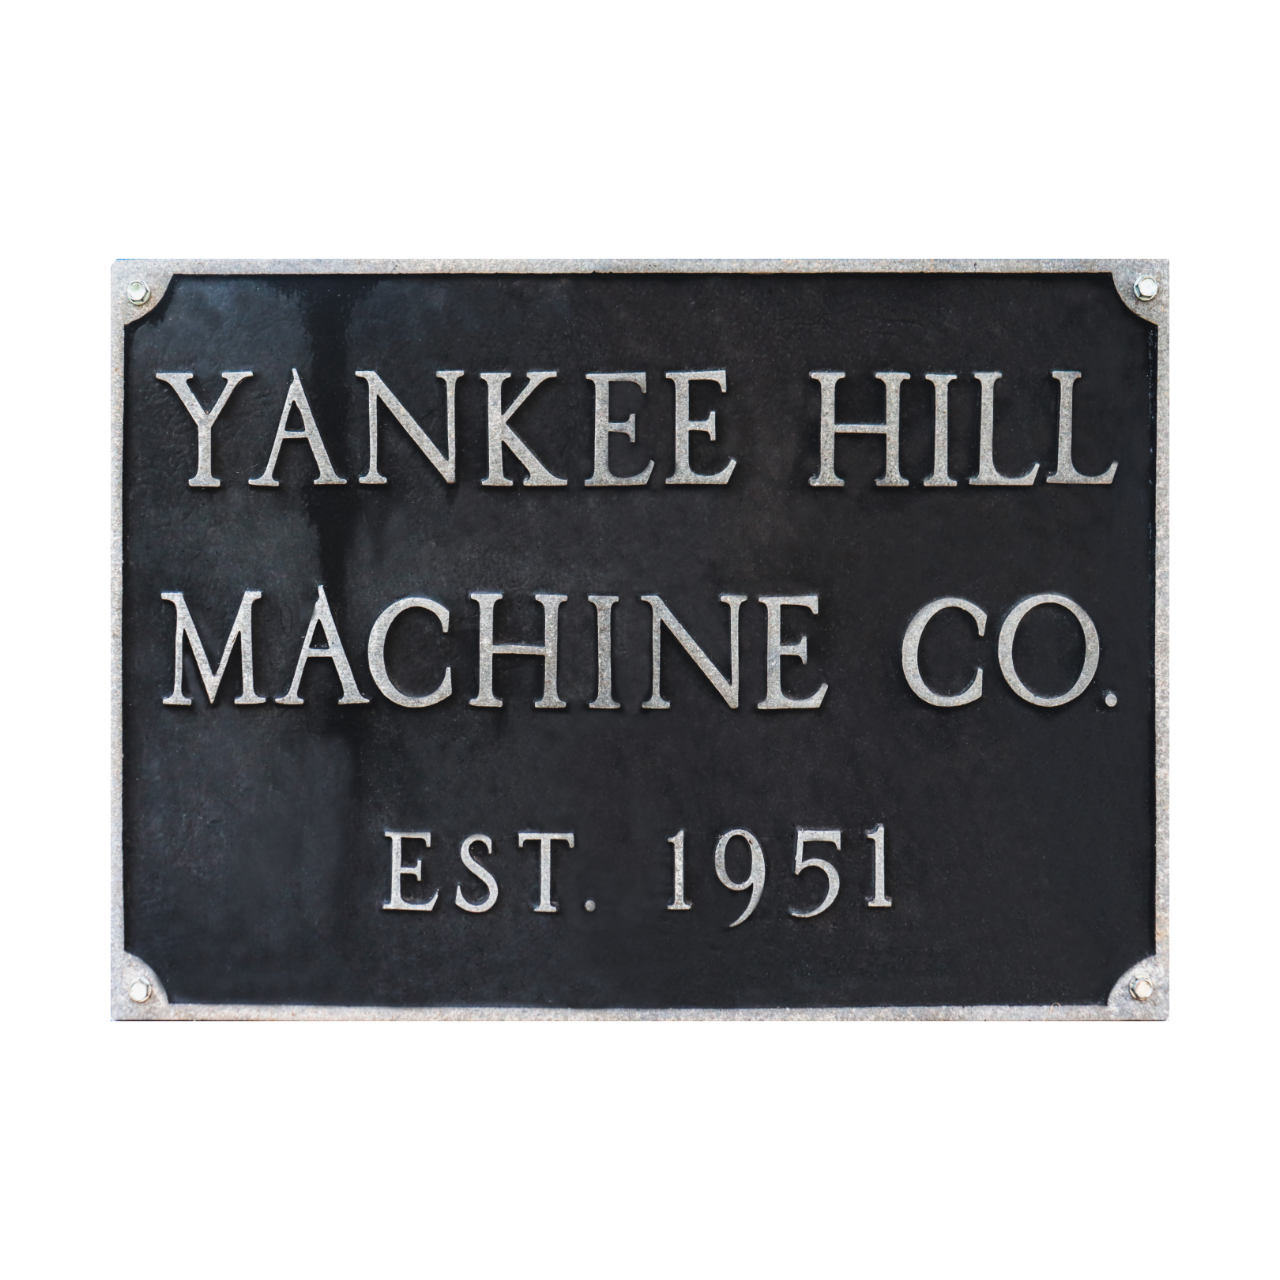 Yankee Hill Machine Co. Est. 1951